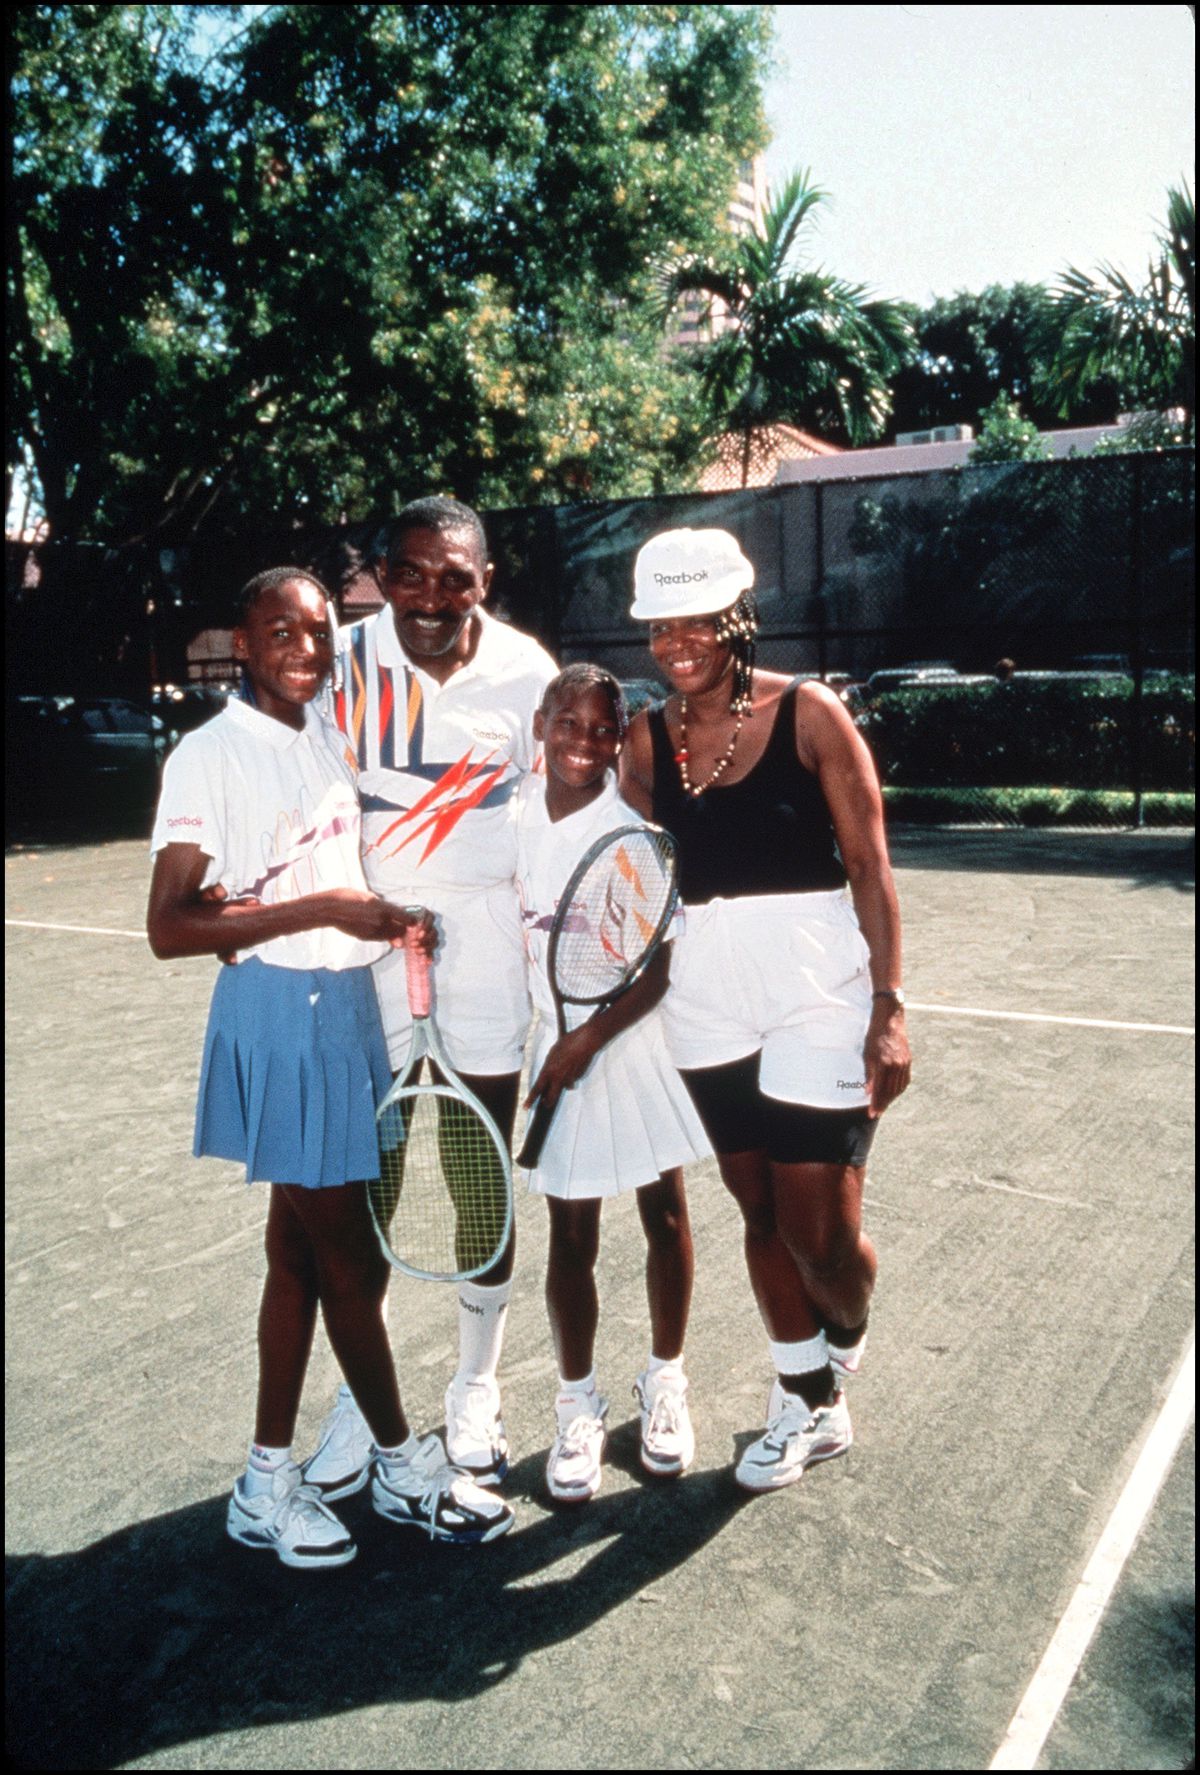 Serena and Venus Williams, stock images.